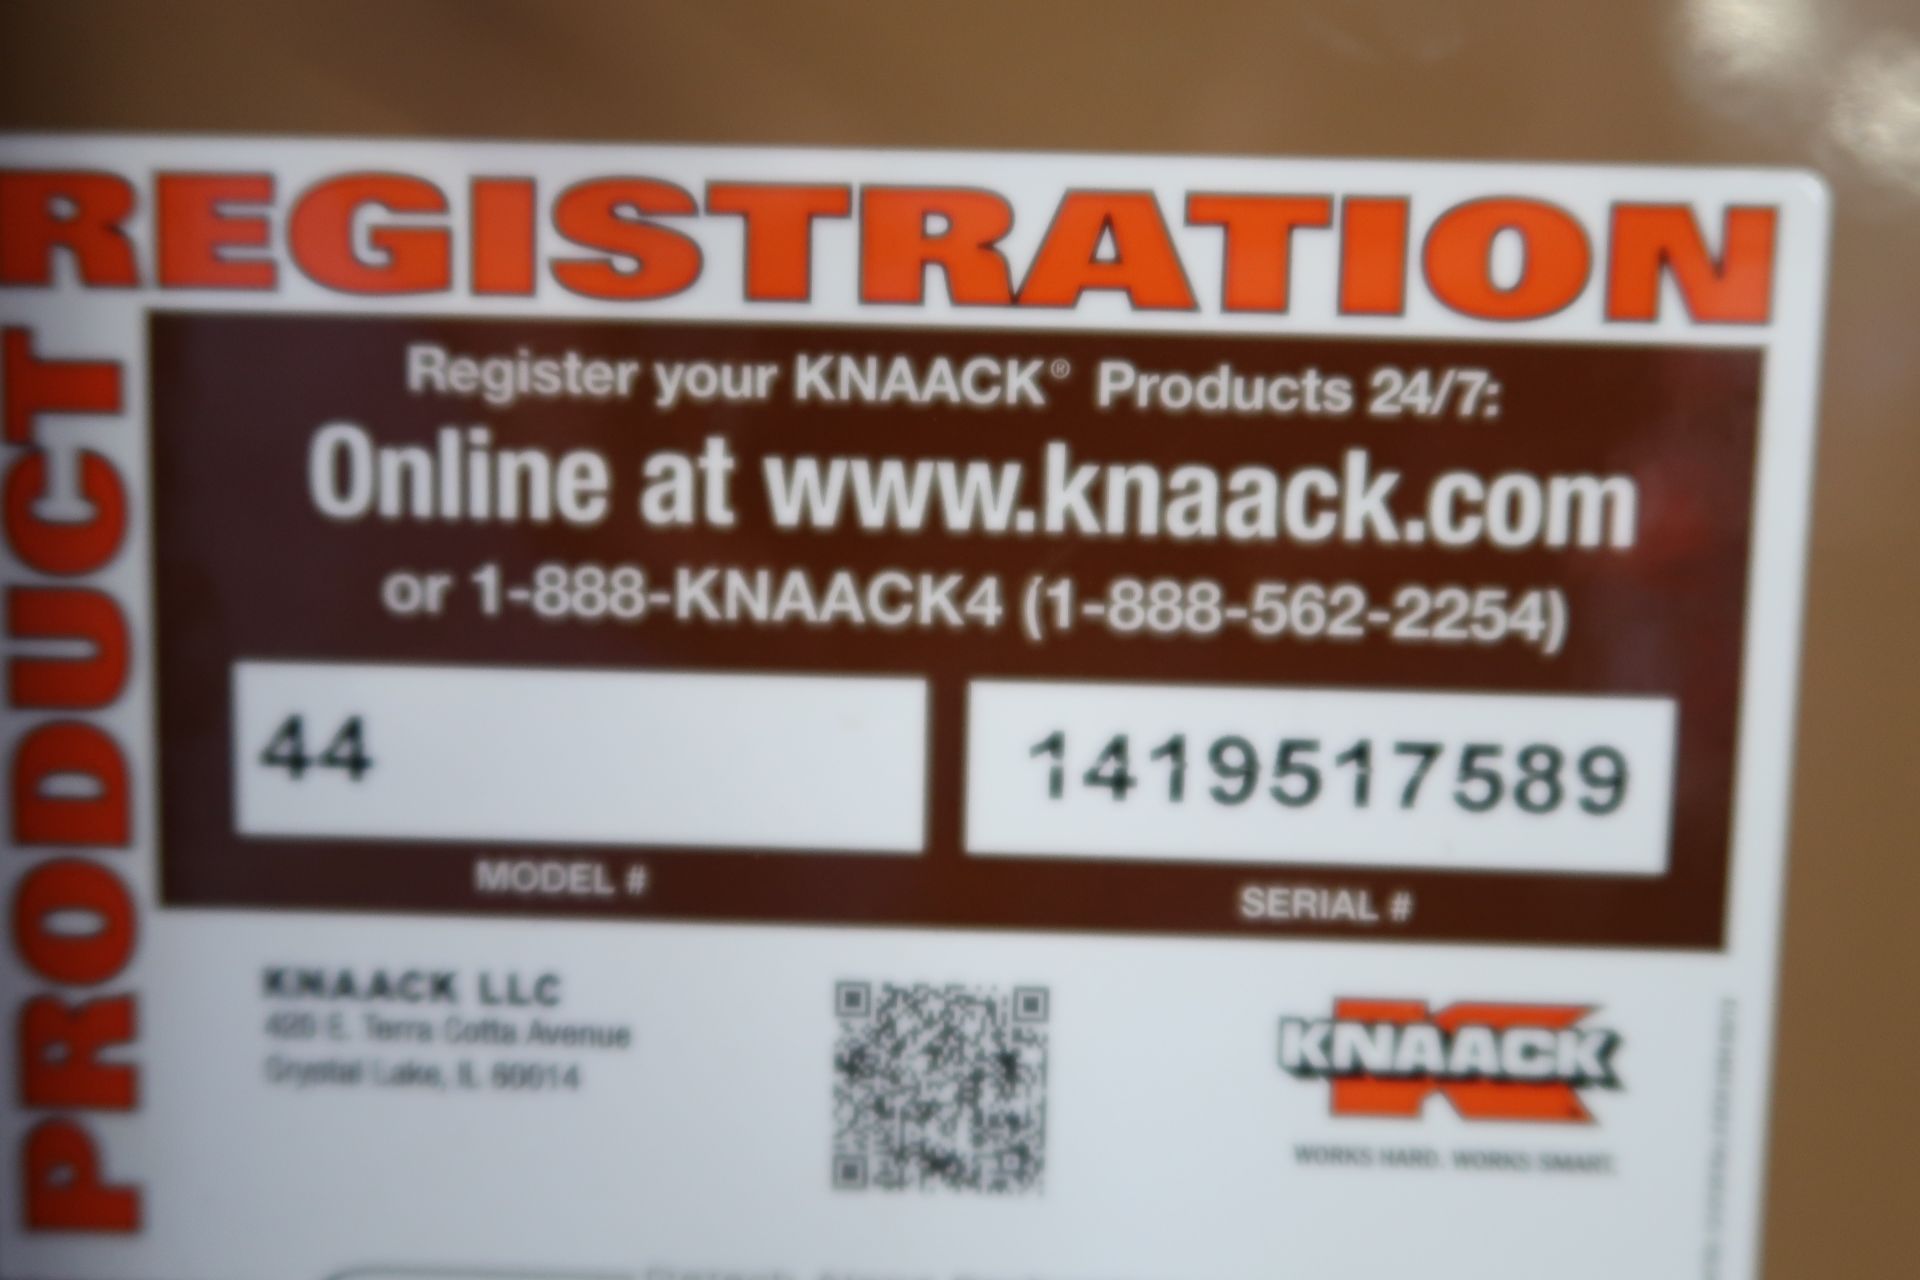 Knaack mdl. 44 Rolling Job Box (SOLD AS-IS - NO WARRANTY) - Image 4 of 4